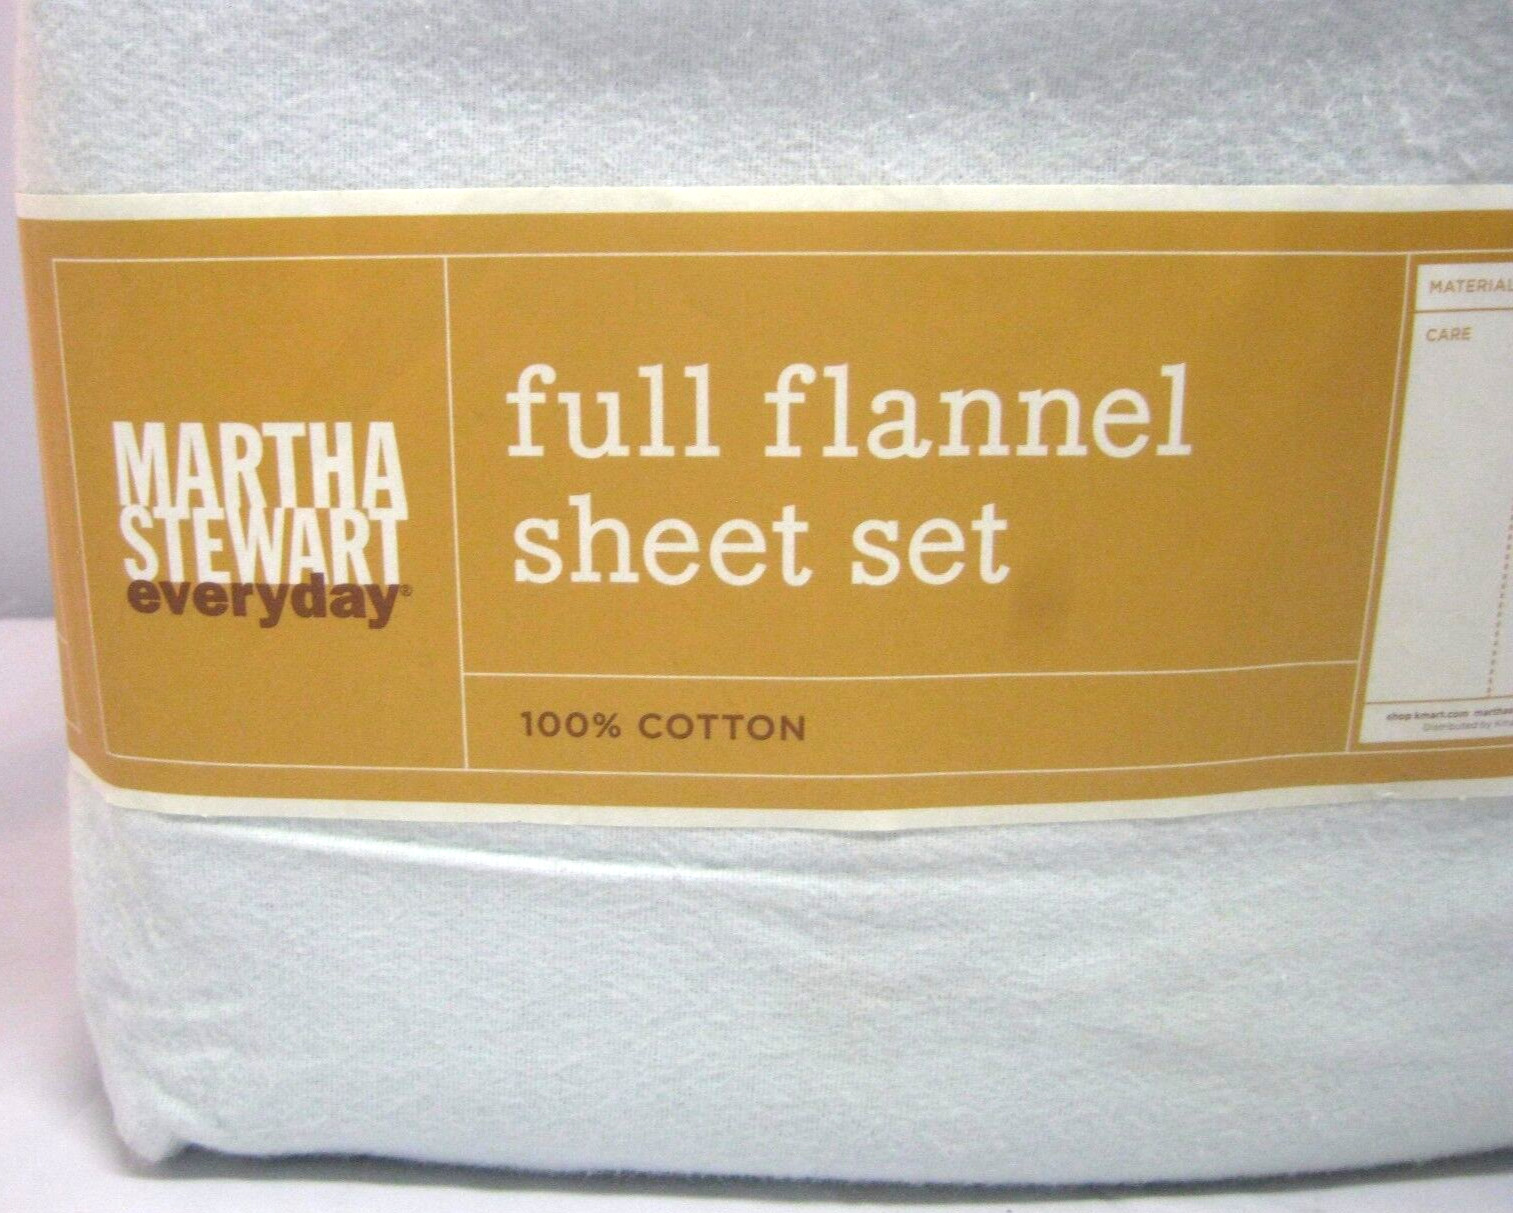 New Martha Stewart 2008 Flannel Sheet Set Full 100% Cotton Porcelain Blue Color